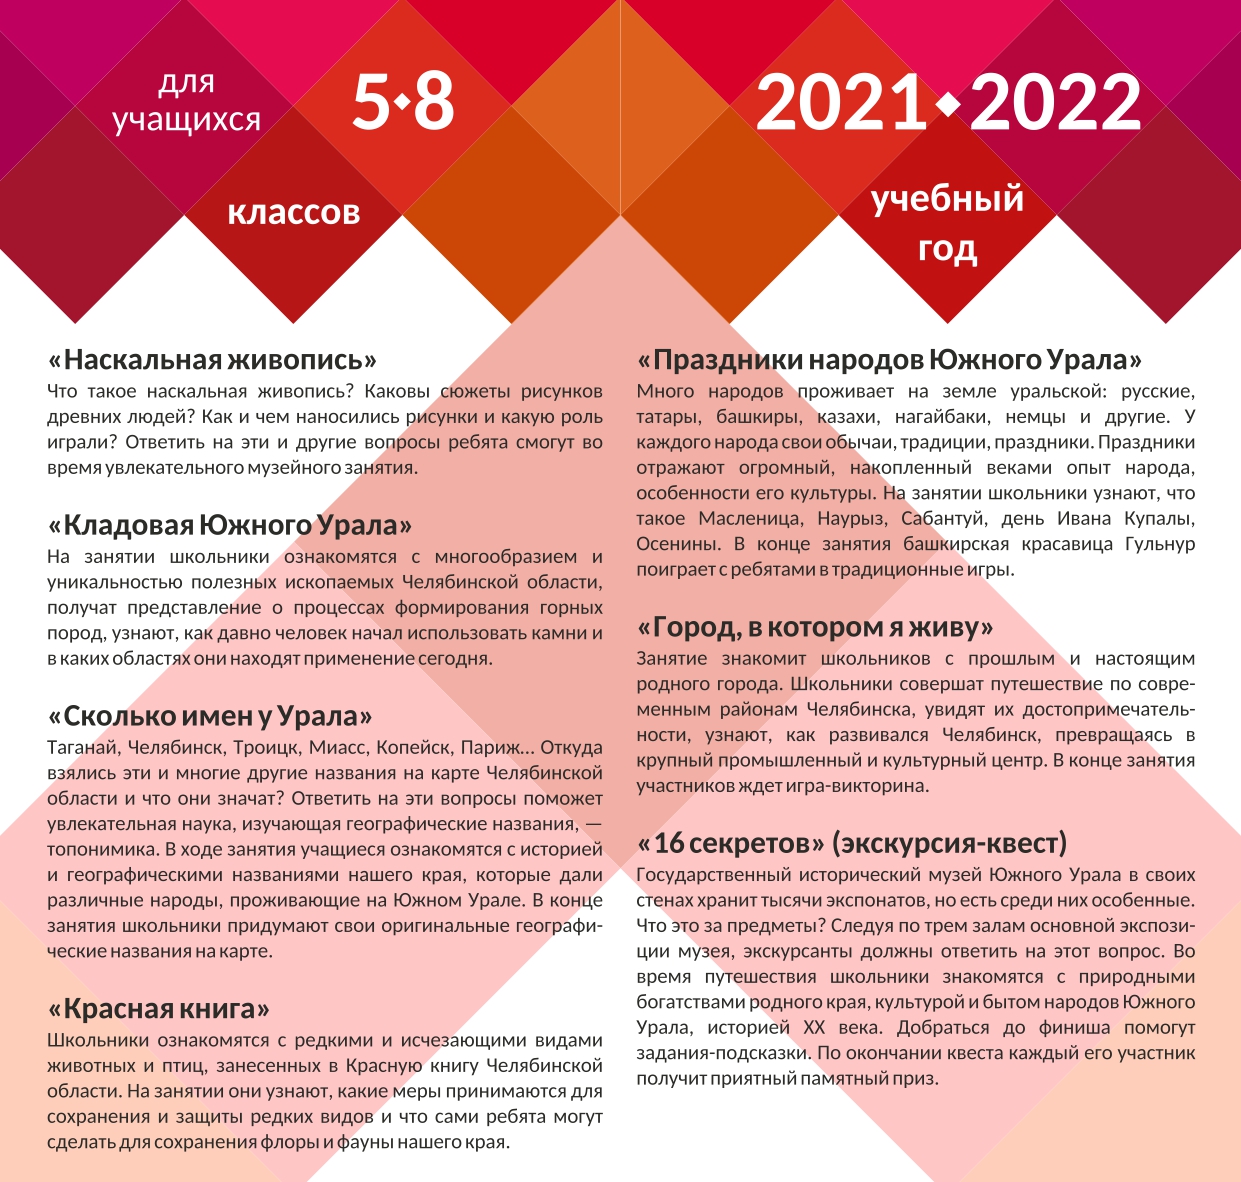 Buklet_tematicheskie_zanyatia_2021-2022_page-0004.jpg